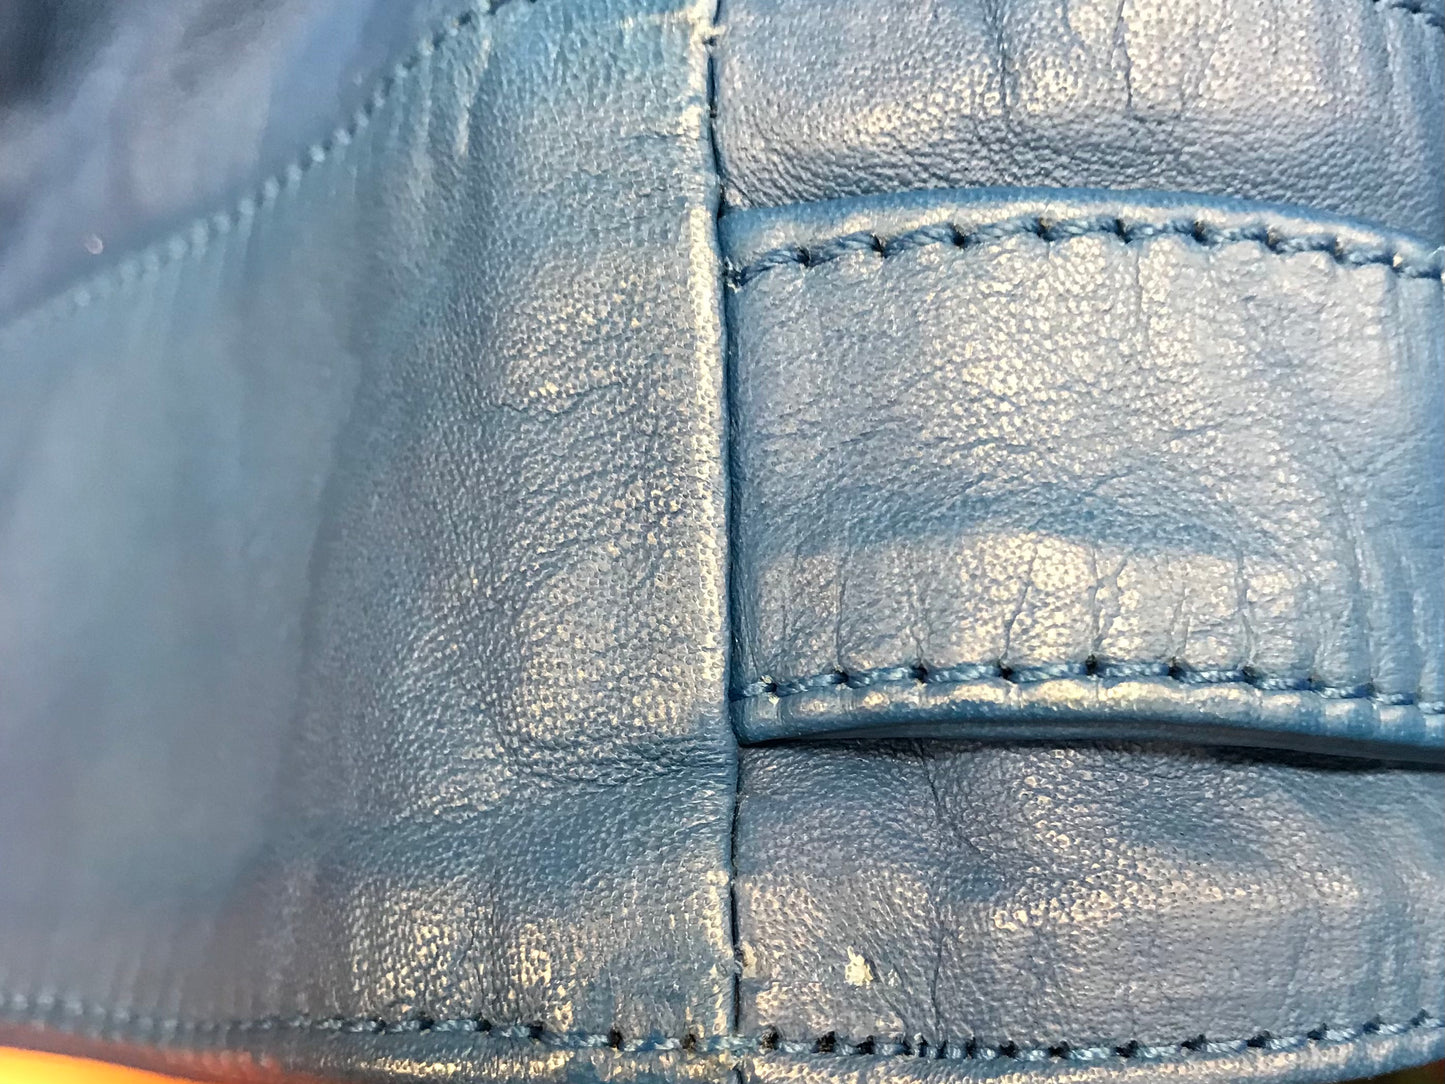 Vintage Leather Jacket [I25089]